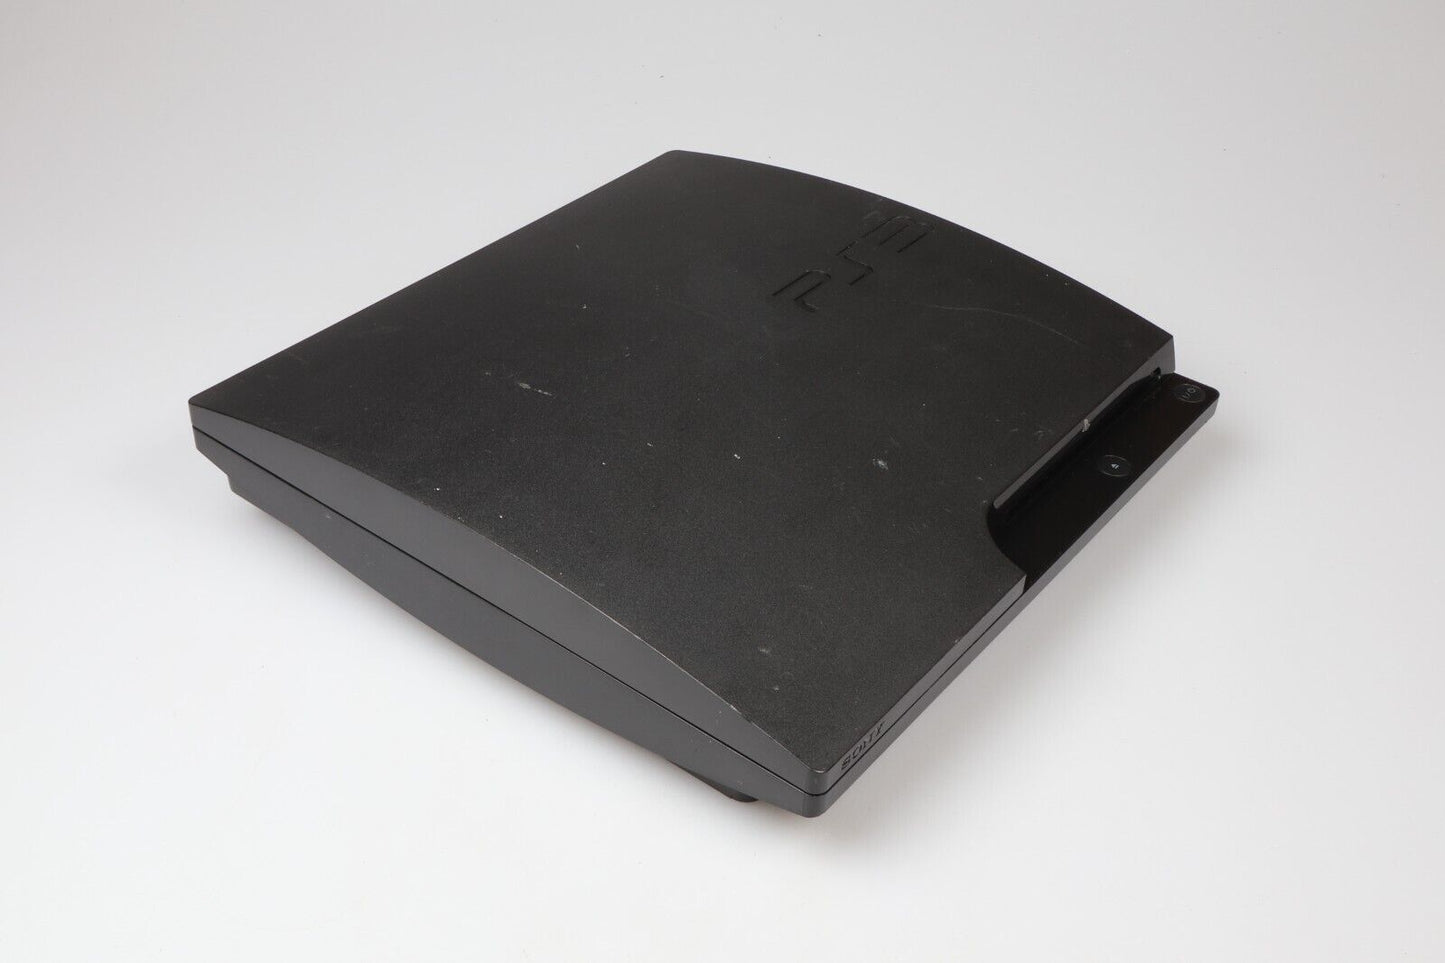 Playstation 3 | Console CECH-3004A 160GB Bundle